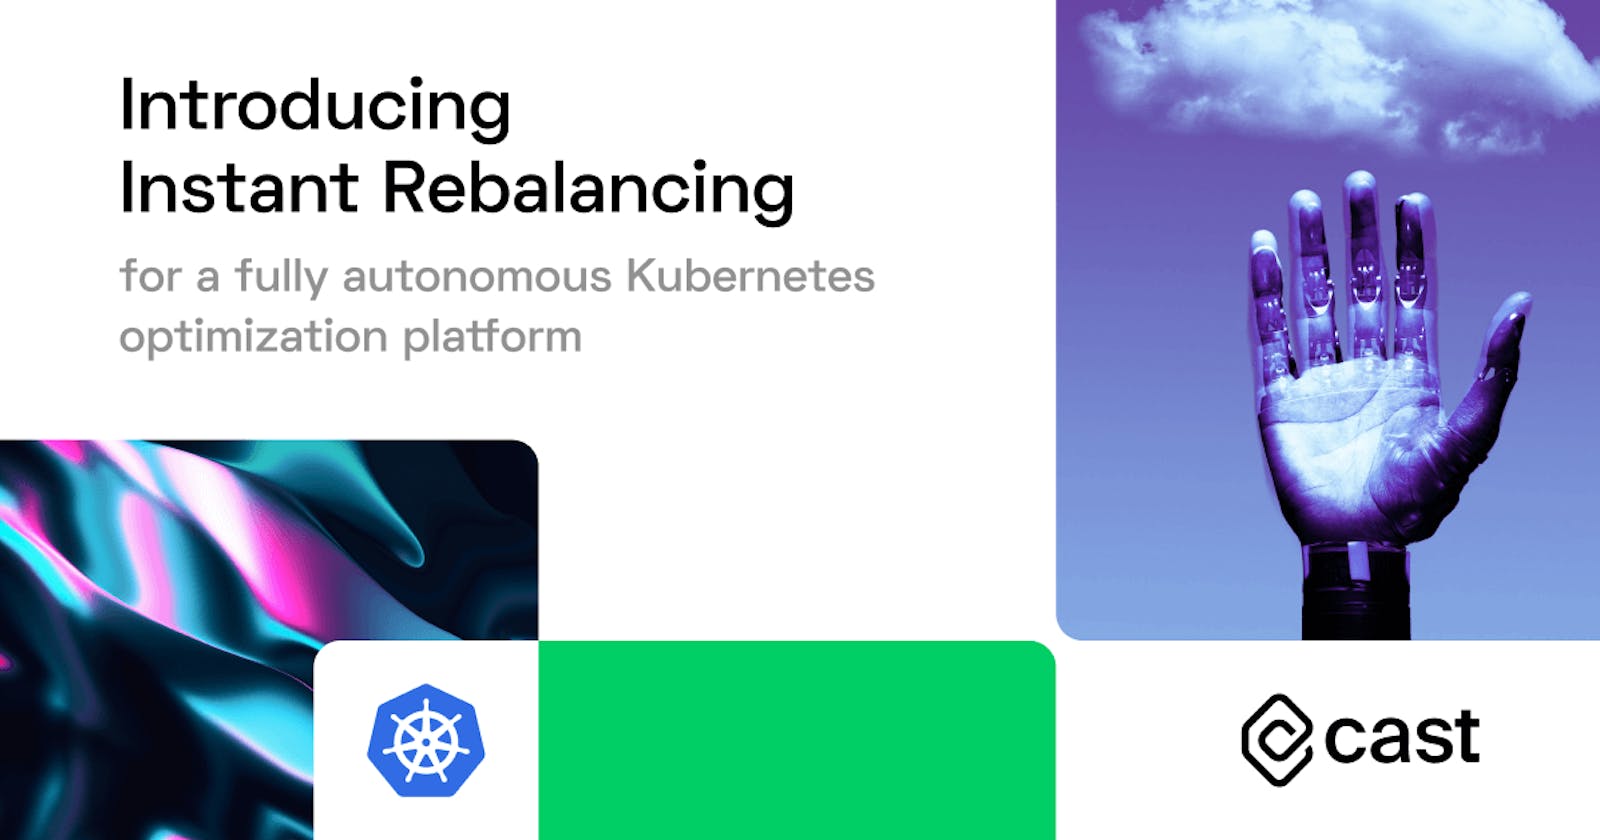 Introducing Instant Rebalancing for a fully autonomous Kubernetes optimization platform